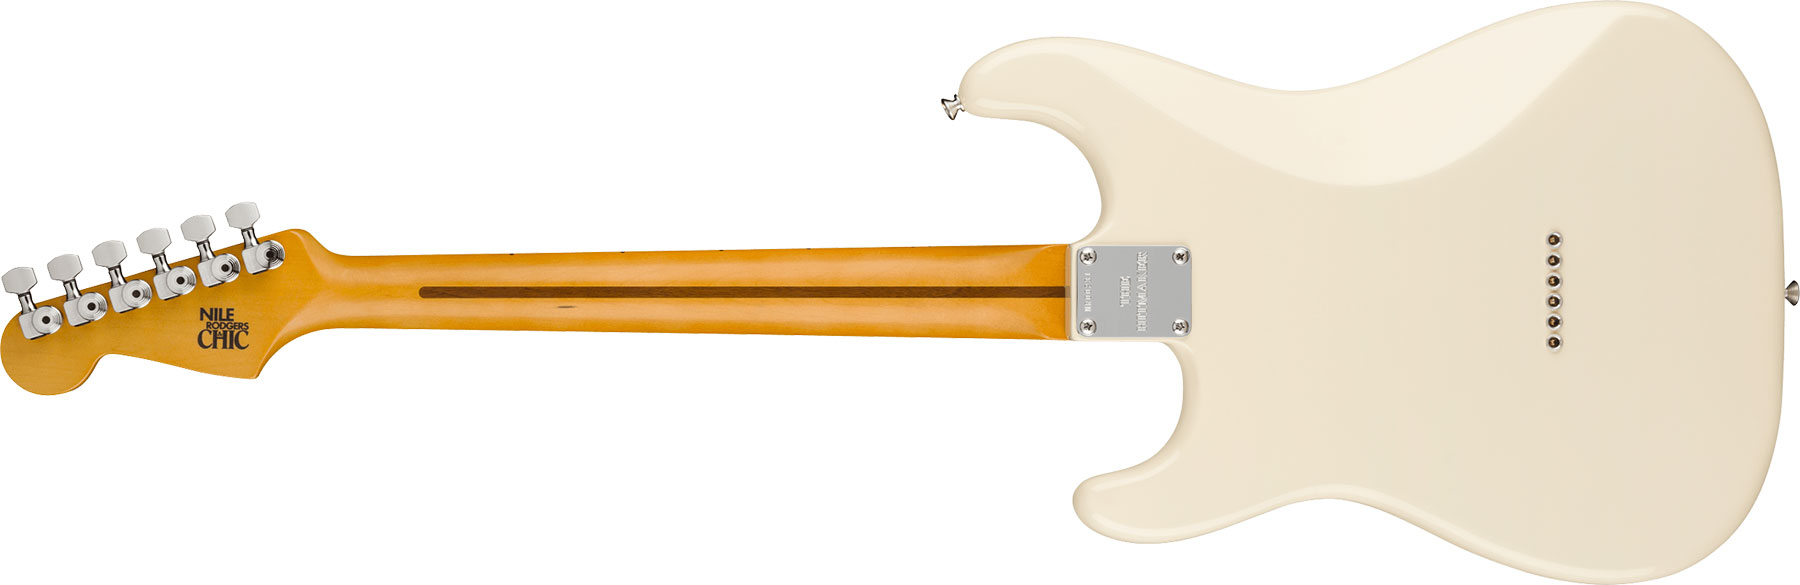 Fender Nile Rodgers Strat Hitmaker Usa Signature 3s Ht Mn - Olympic White - Str shape electric guitar - Variation 1